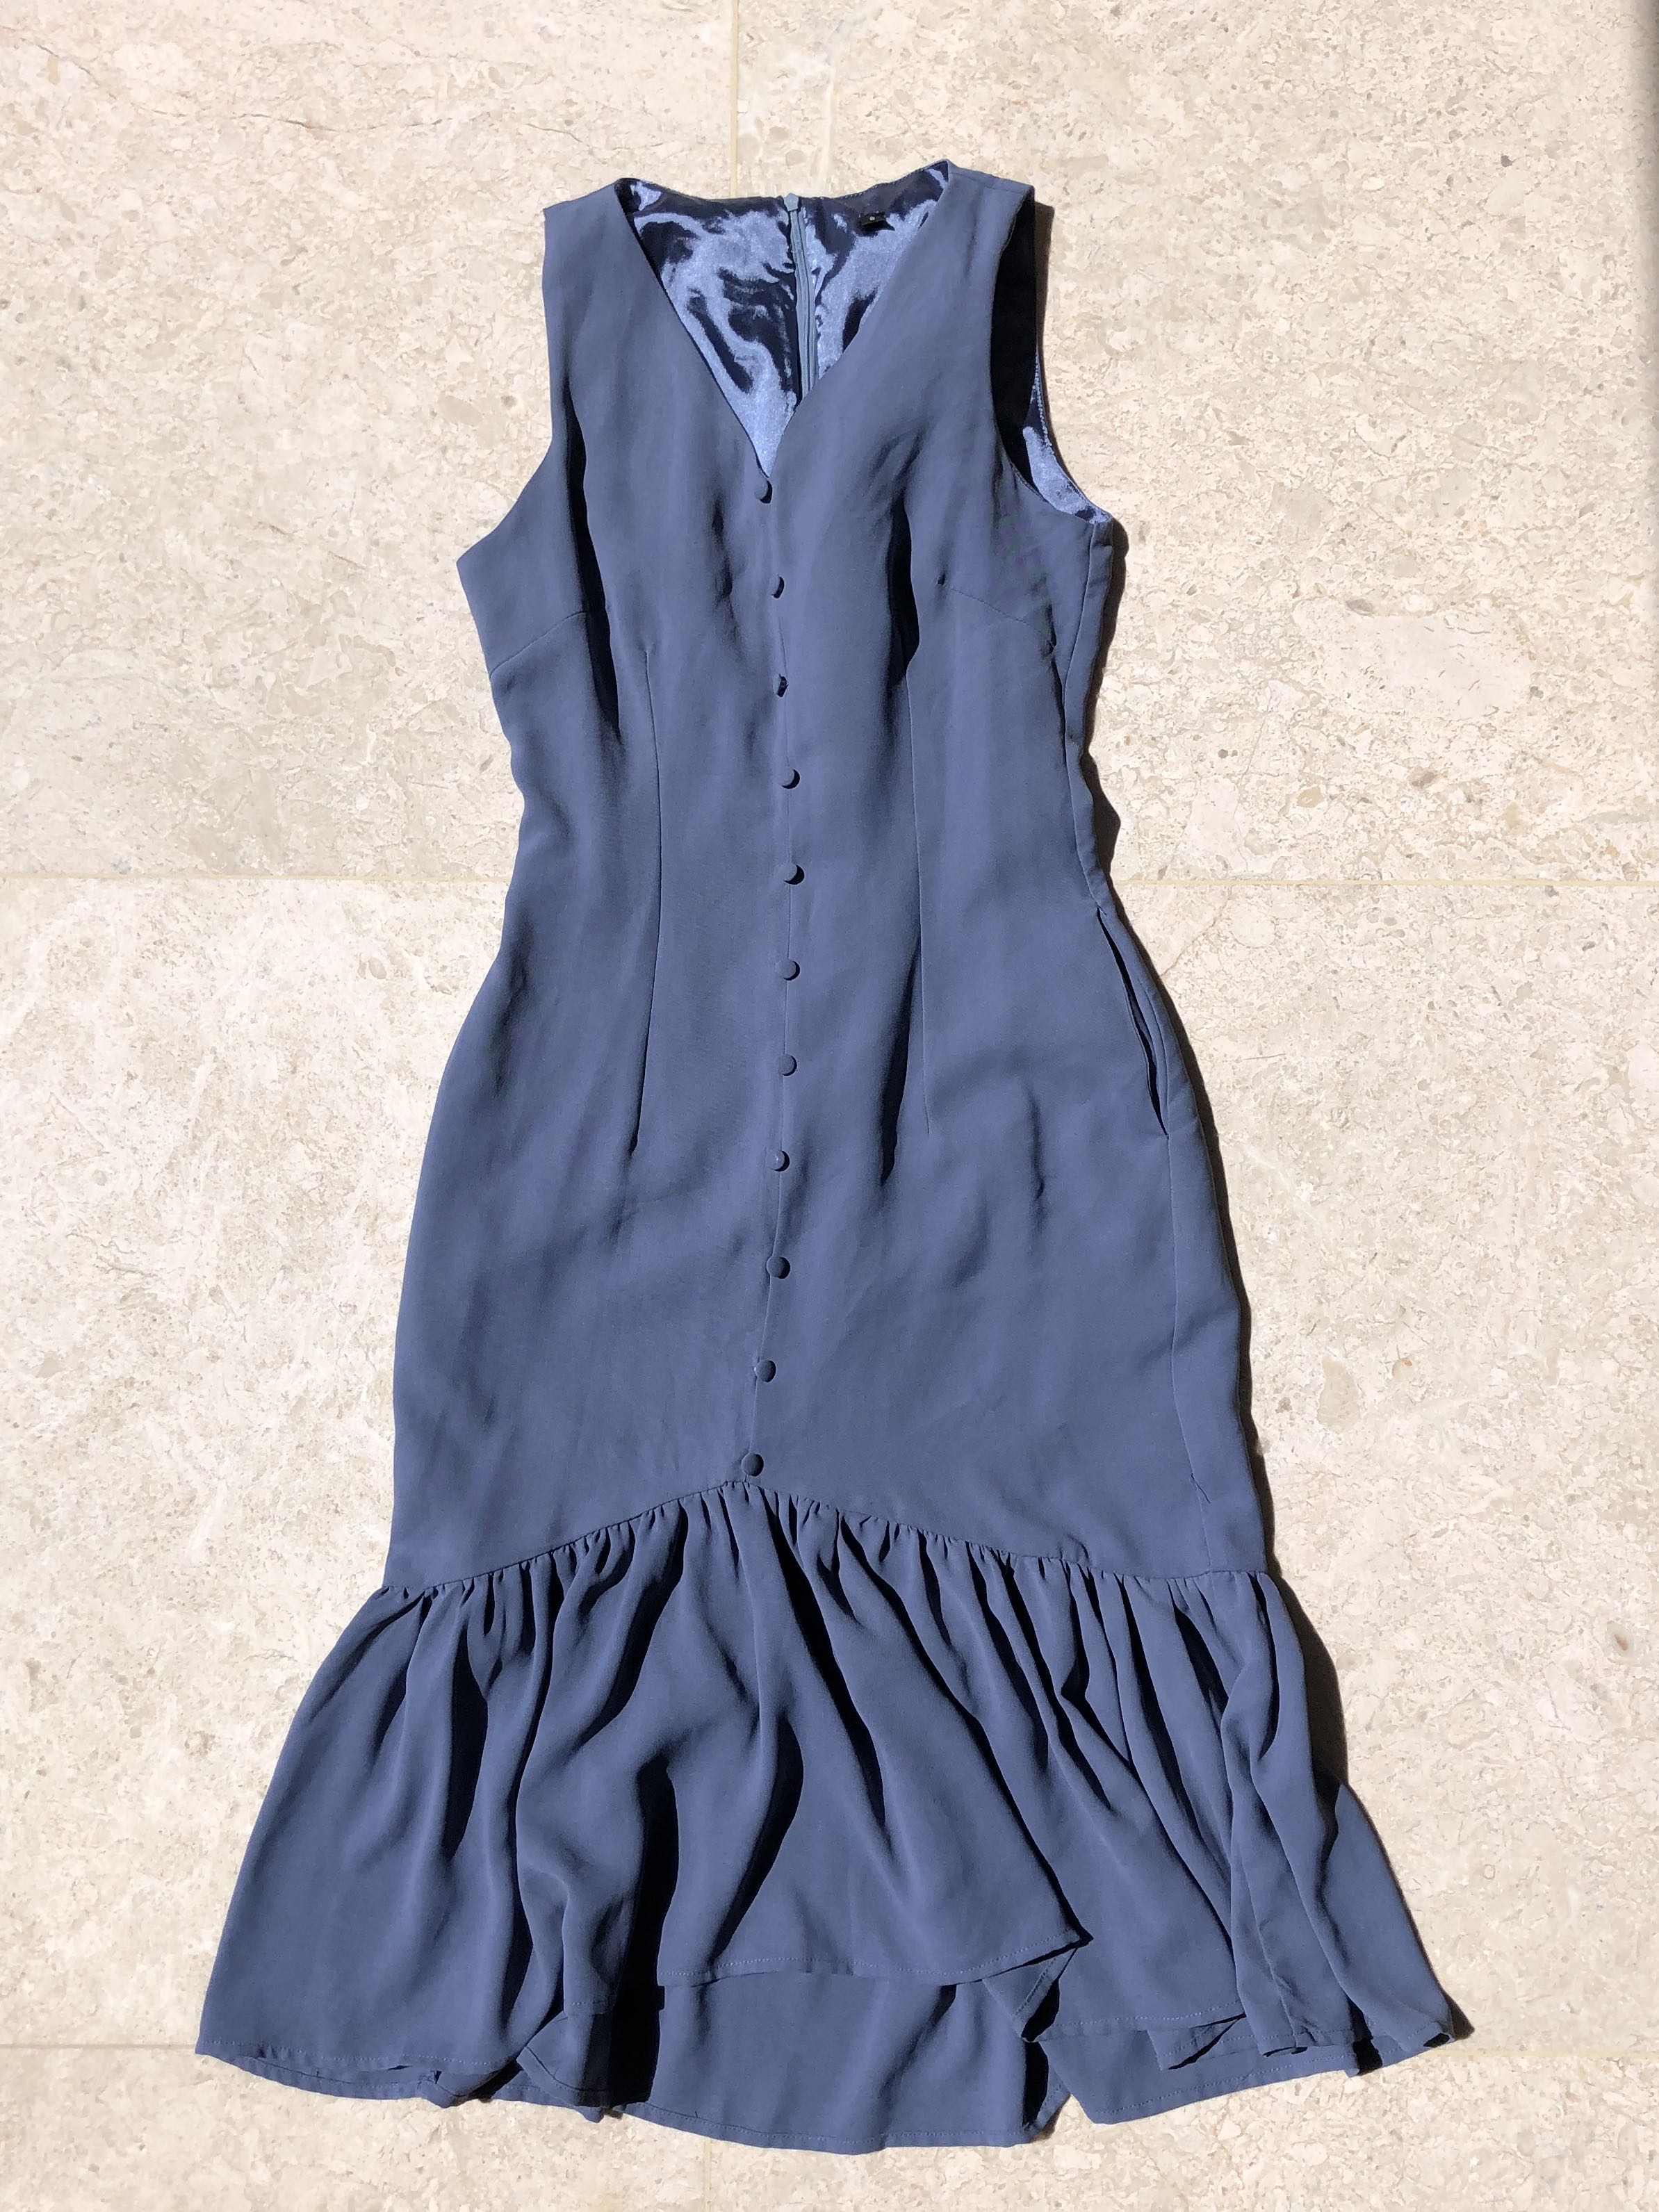 navy blue dress with ruffles